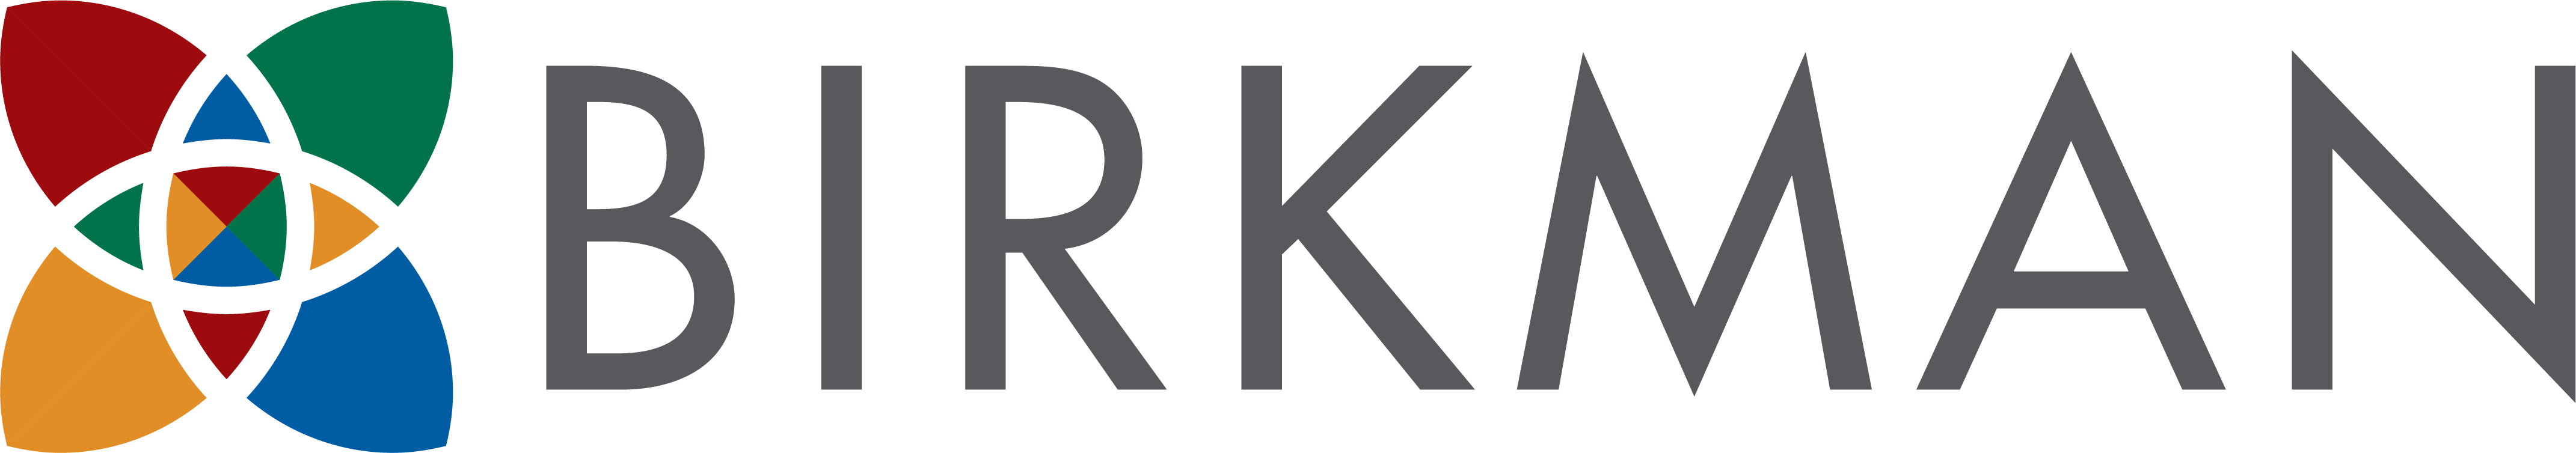 Birkman logo